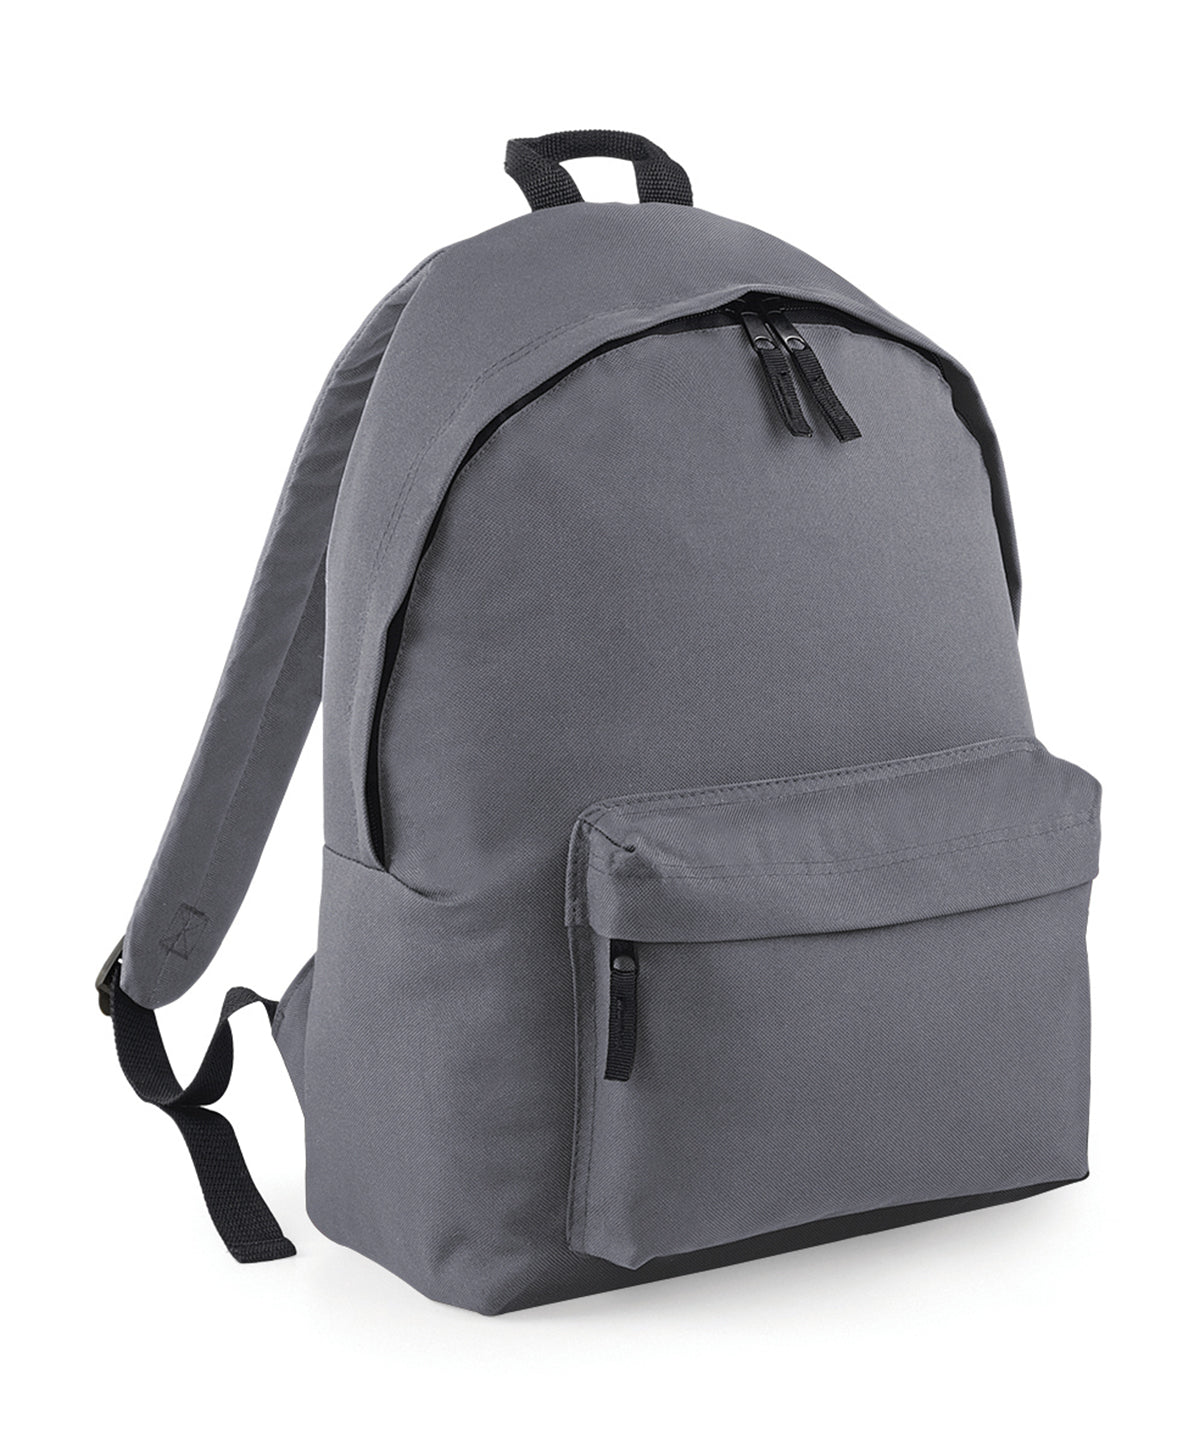 Personalised Bags - Dark Grey Bagbase Original fashion backpack